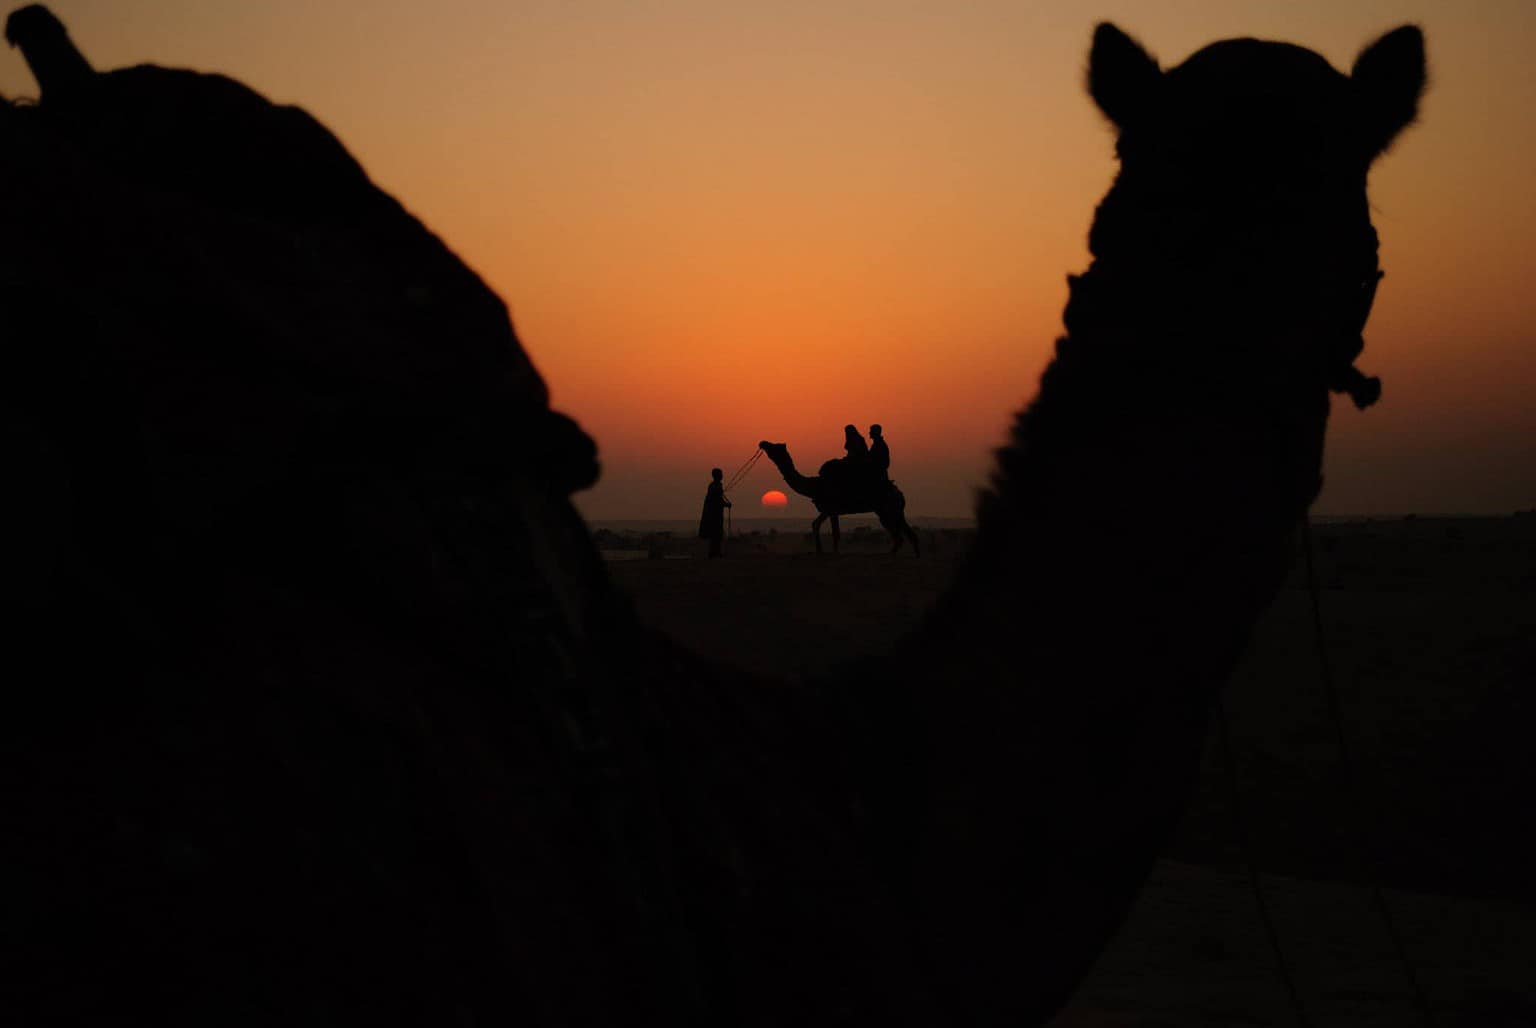 Royale Rajasthan | Stunning Sunset over Sand Dunes in Jaiselmer